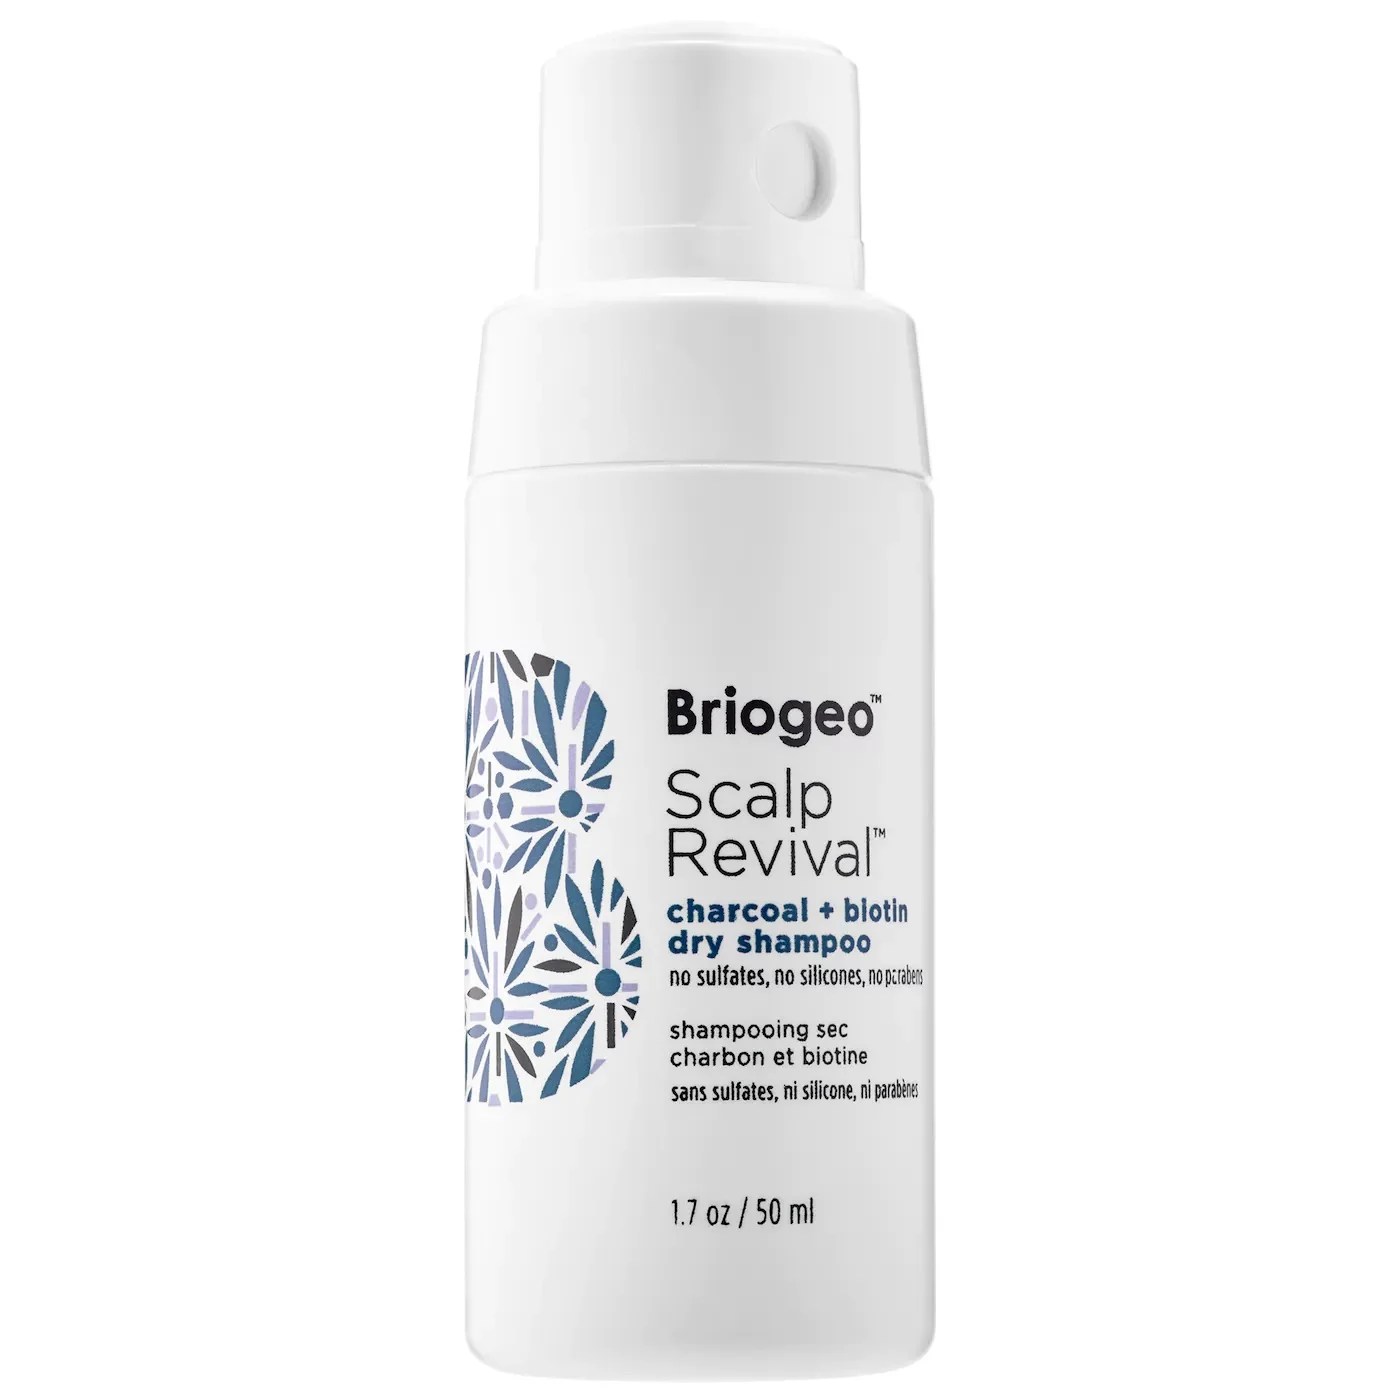 A bottle of Briogeo Scalp Revival Charcoal + Biotin Dry Shampoo.